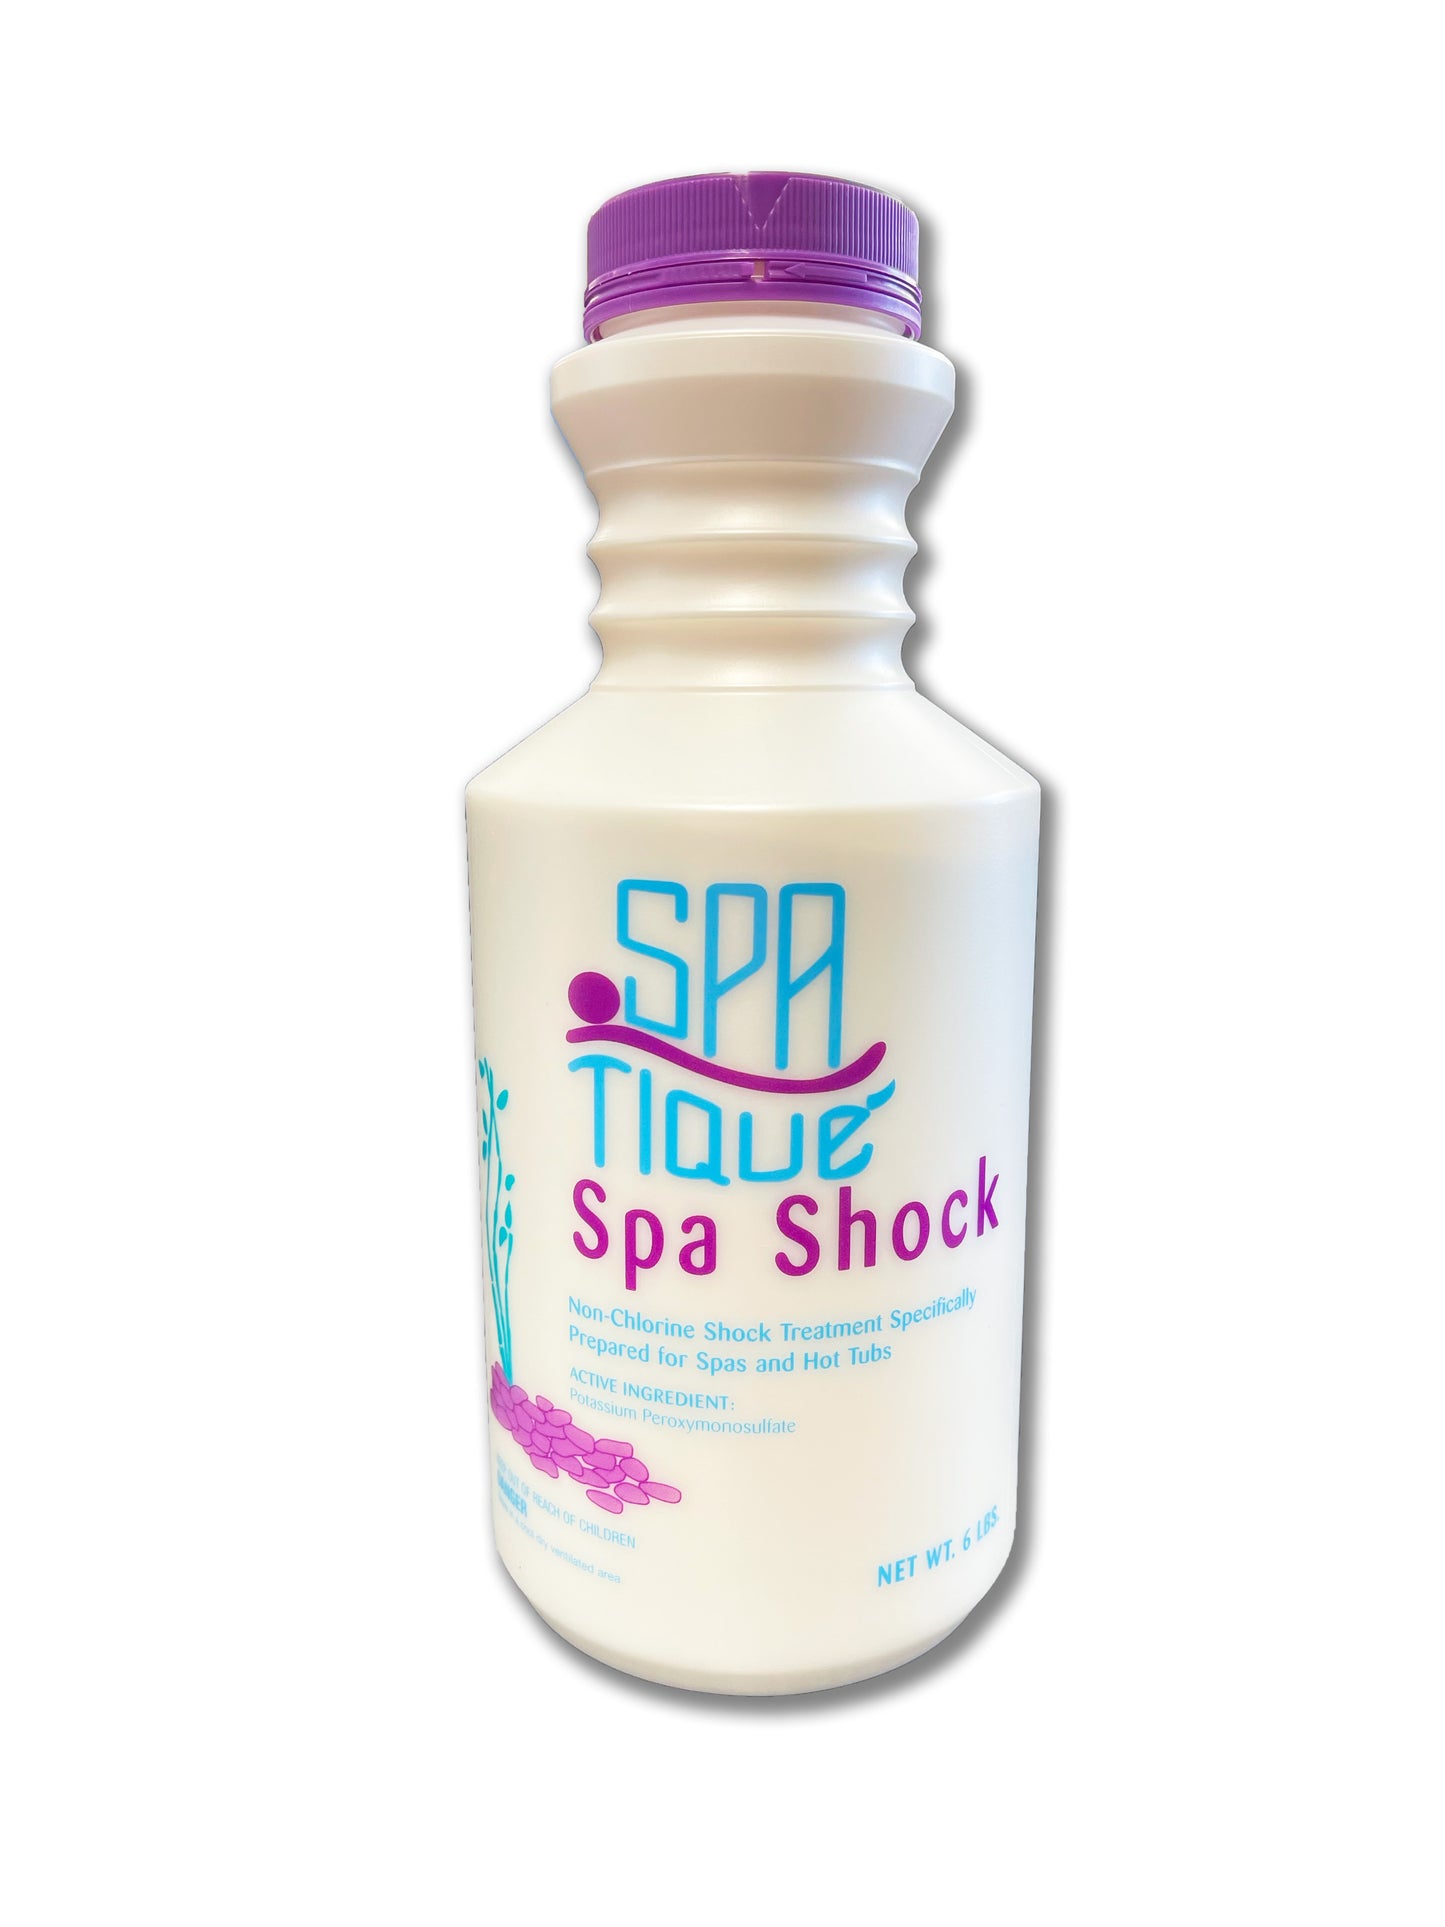 SpaTique Spa Shock Non-Chlorine Oxidizer